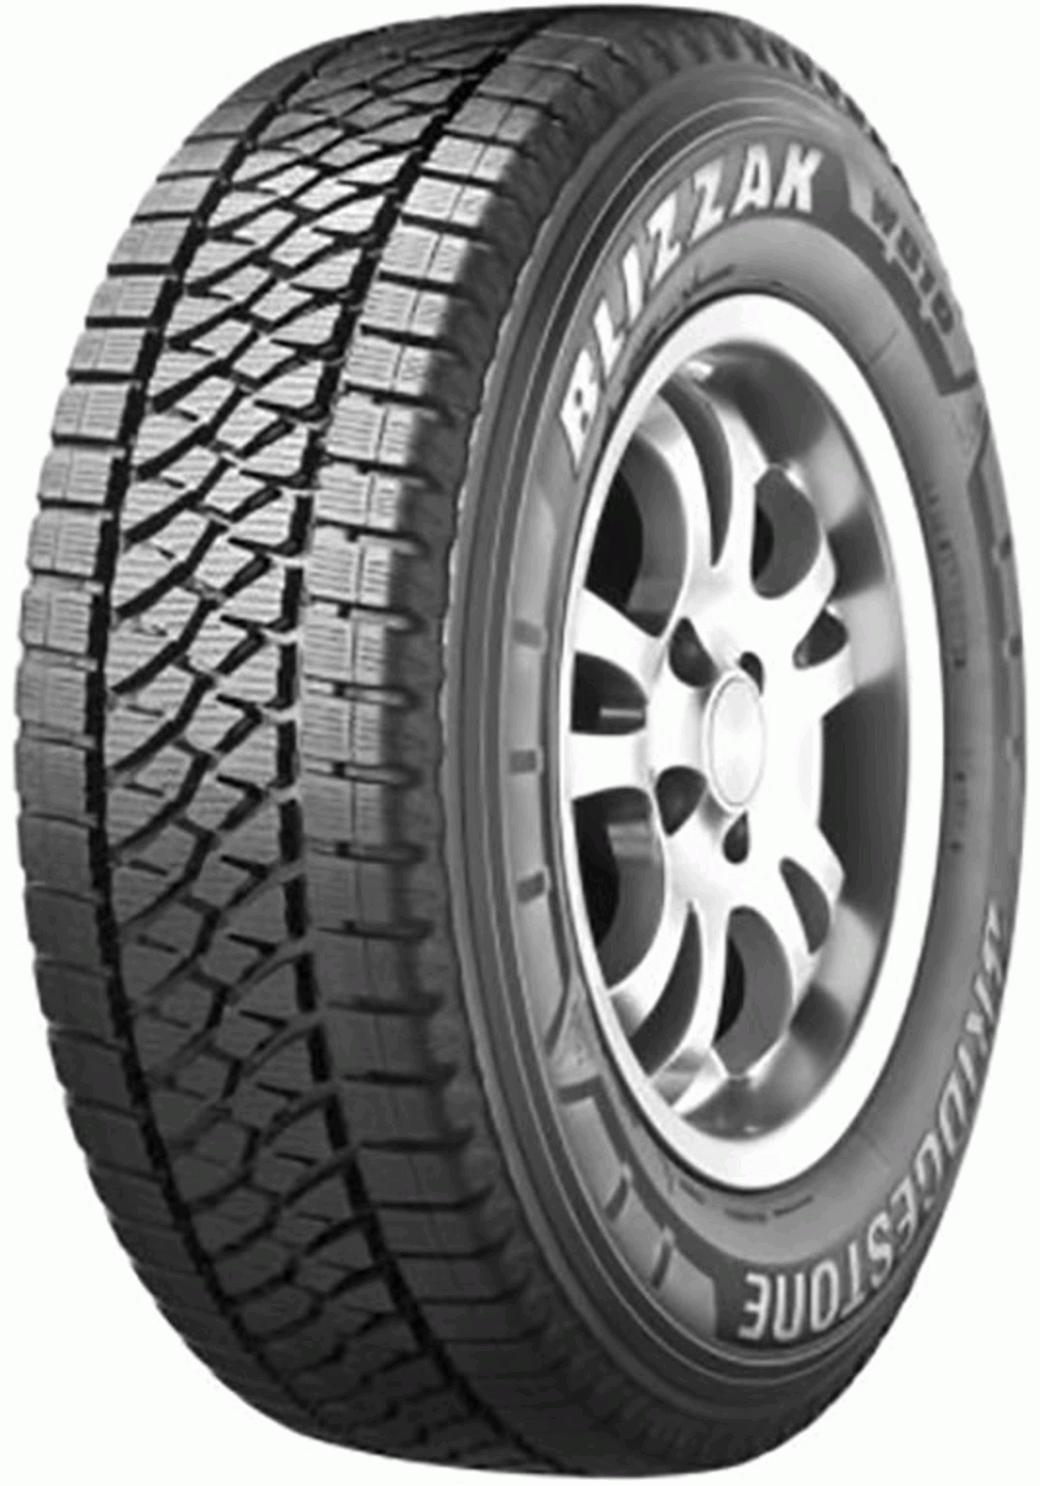 Blizzak Bridgestone Tyre - W810 Reviews and Tests